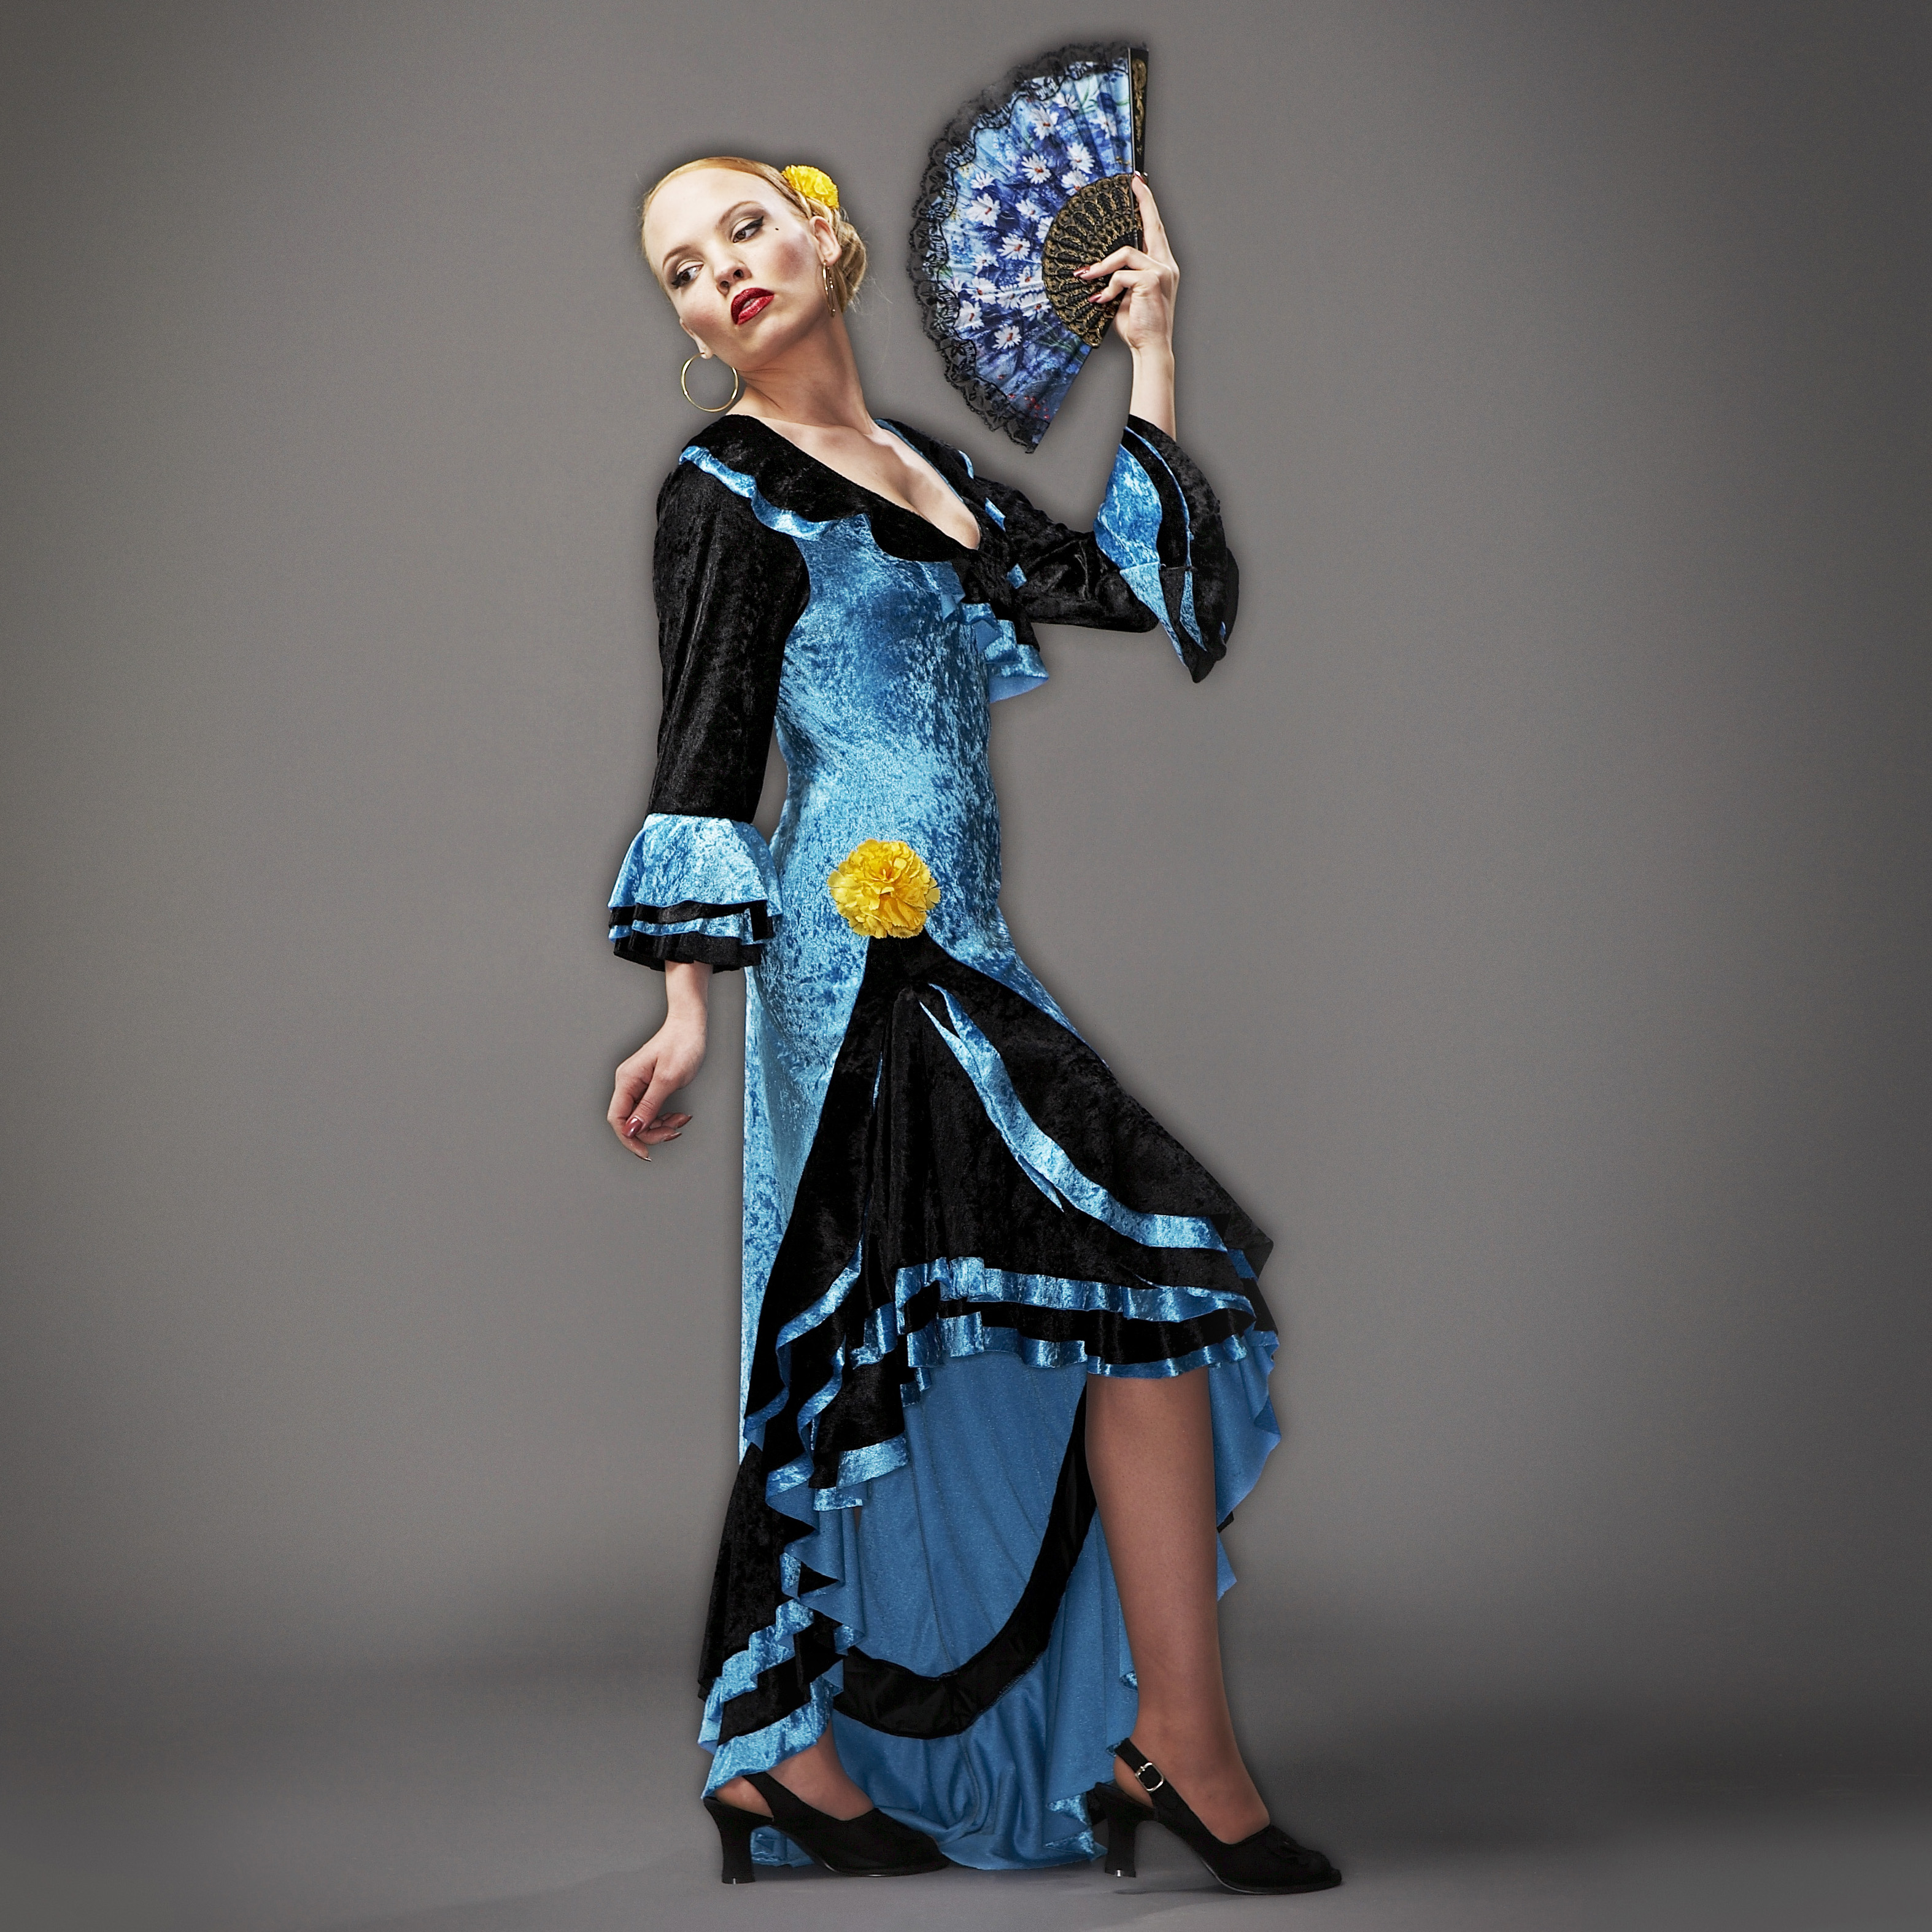 AMC Women's Lacy Senorita Adult Costume - One-Size (8-14)